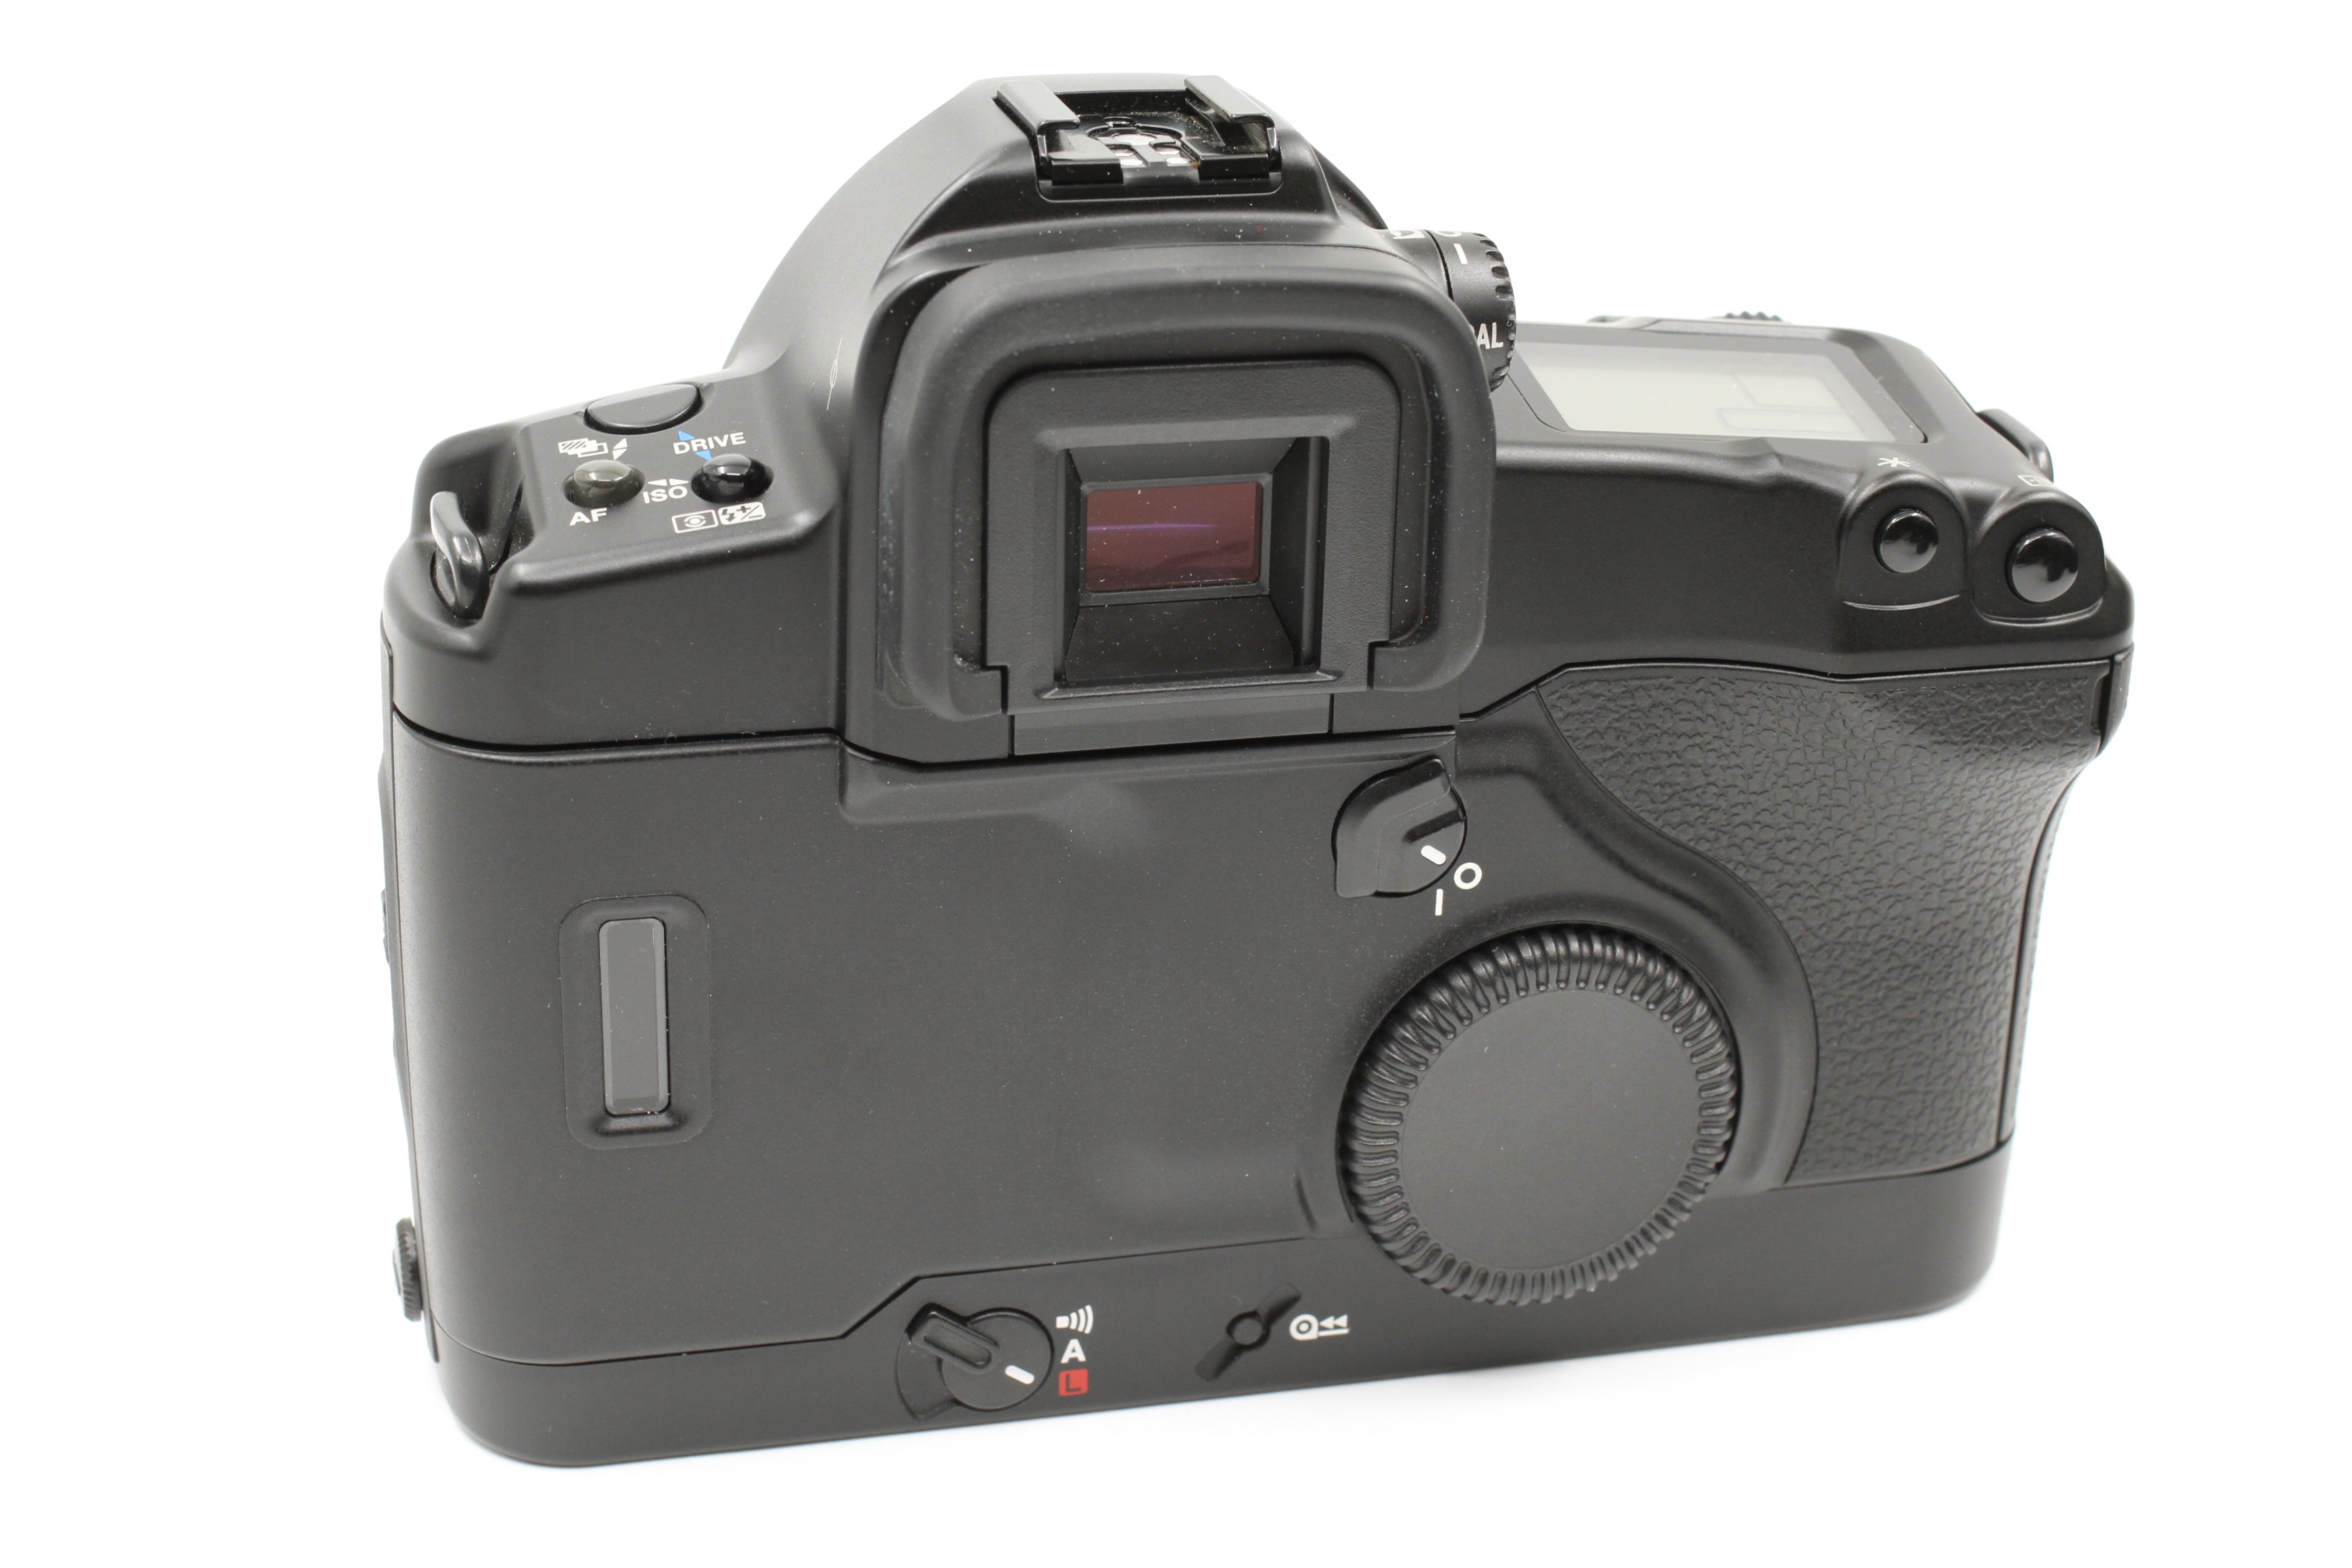 Canon EOS-3 Pro 35mm Film SLR, Boxed